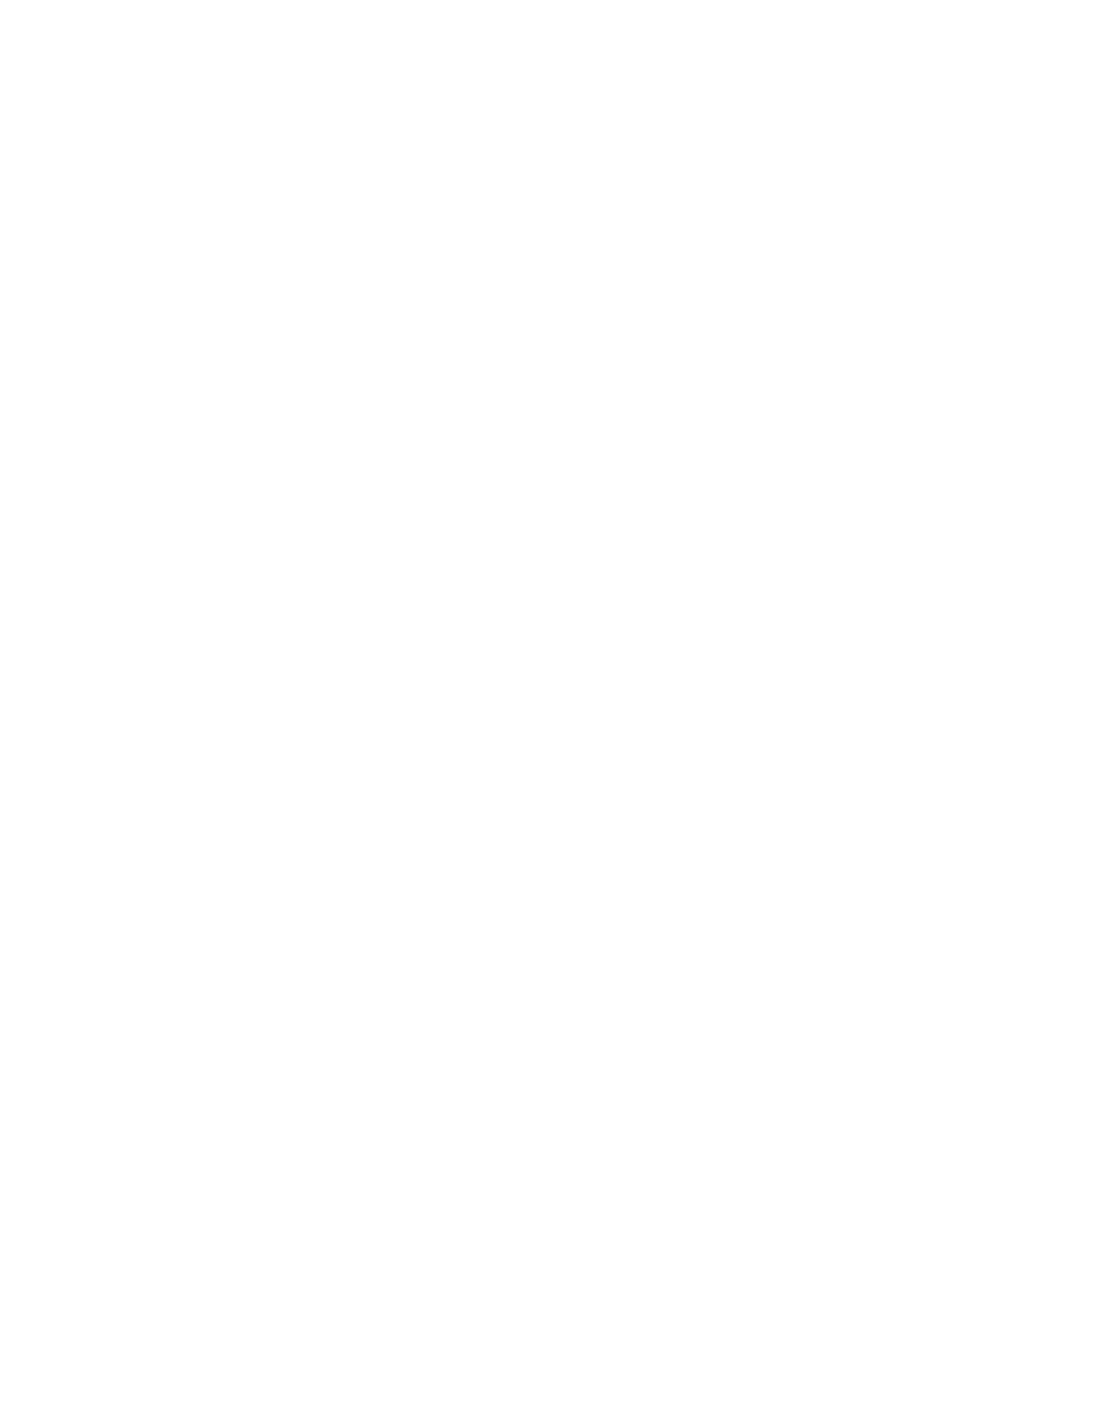 Vinci_Aircraft_Inspections